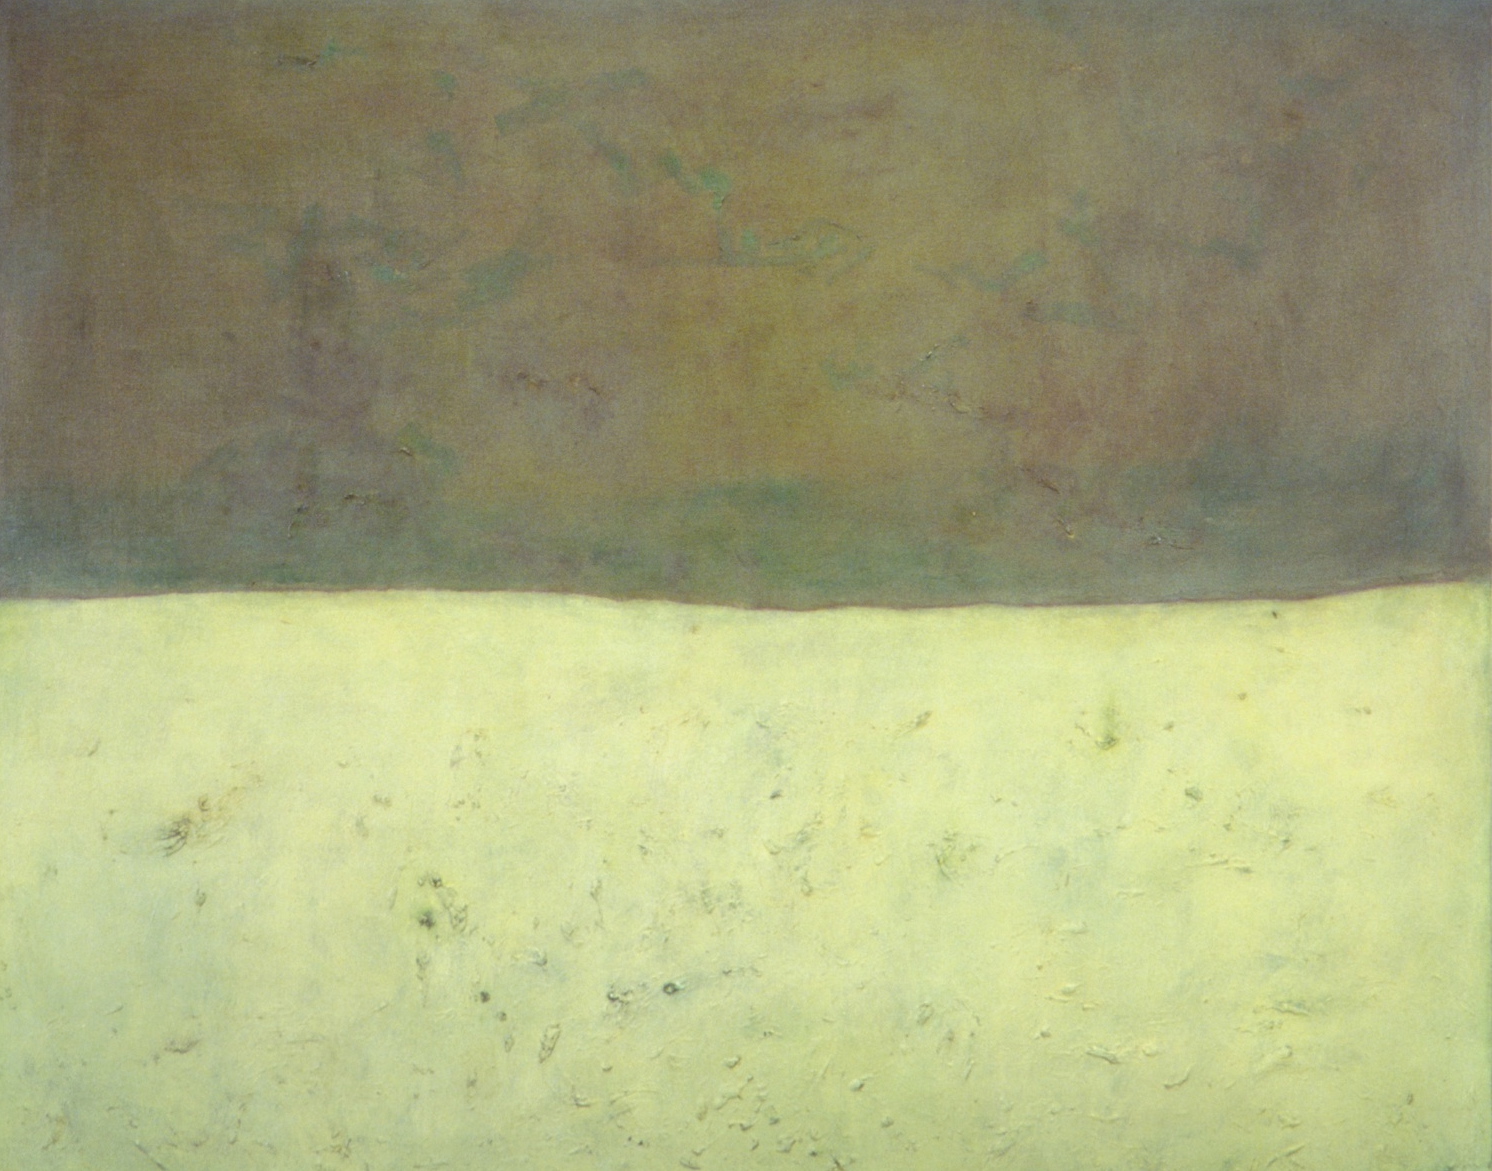  Sonority Plain, oil on canvas, 4, x 5’ /122cm x 152.4cm 